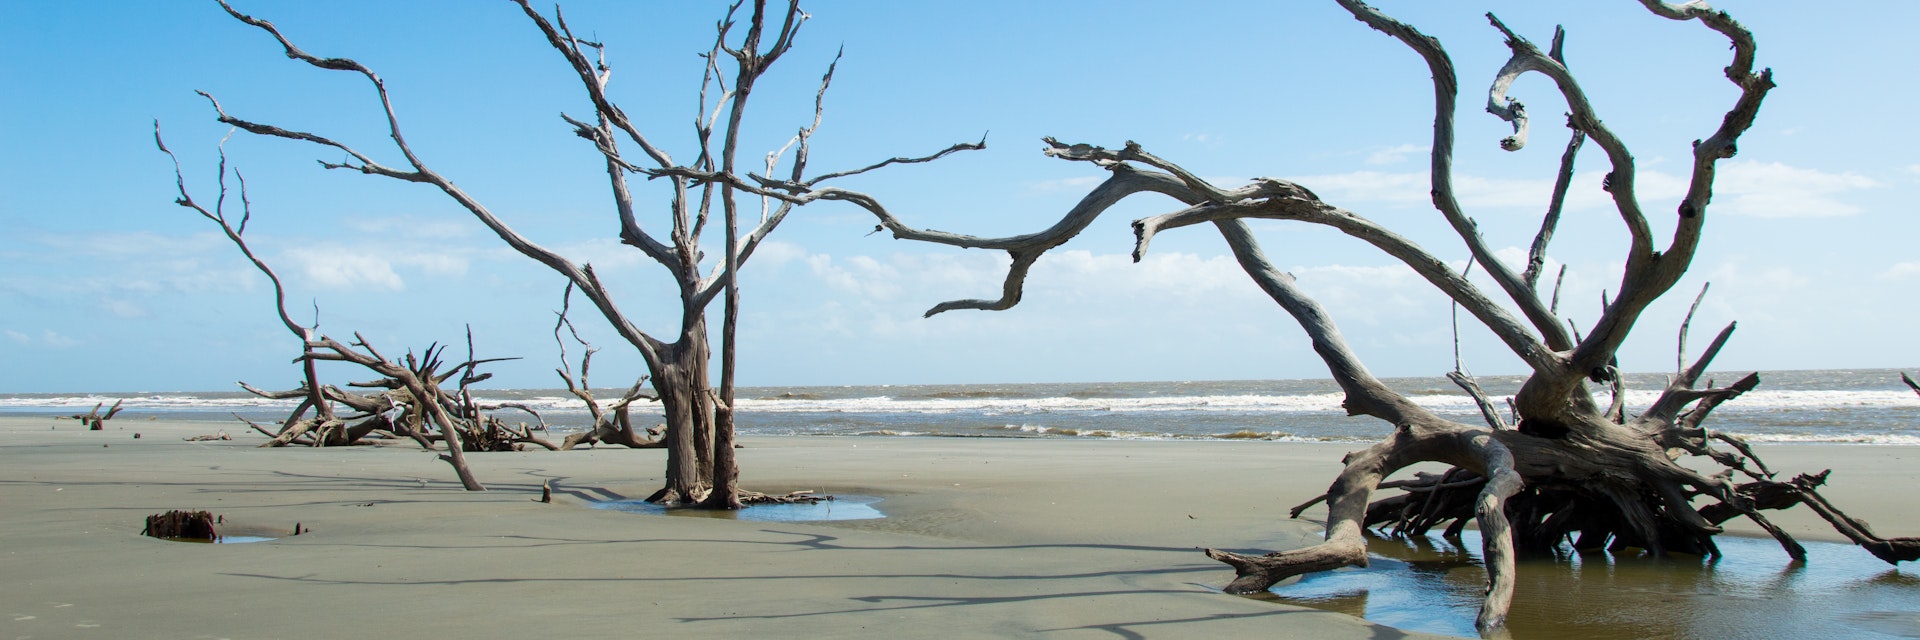 Skeleton trees on Boneyard Beach, Bulls Island, South Carolina.